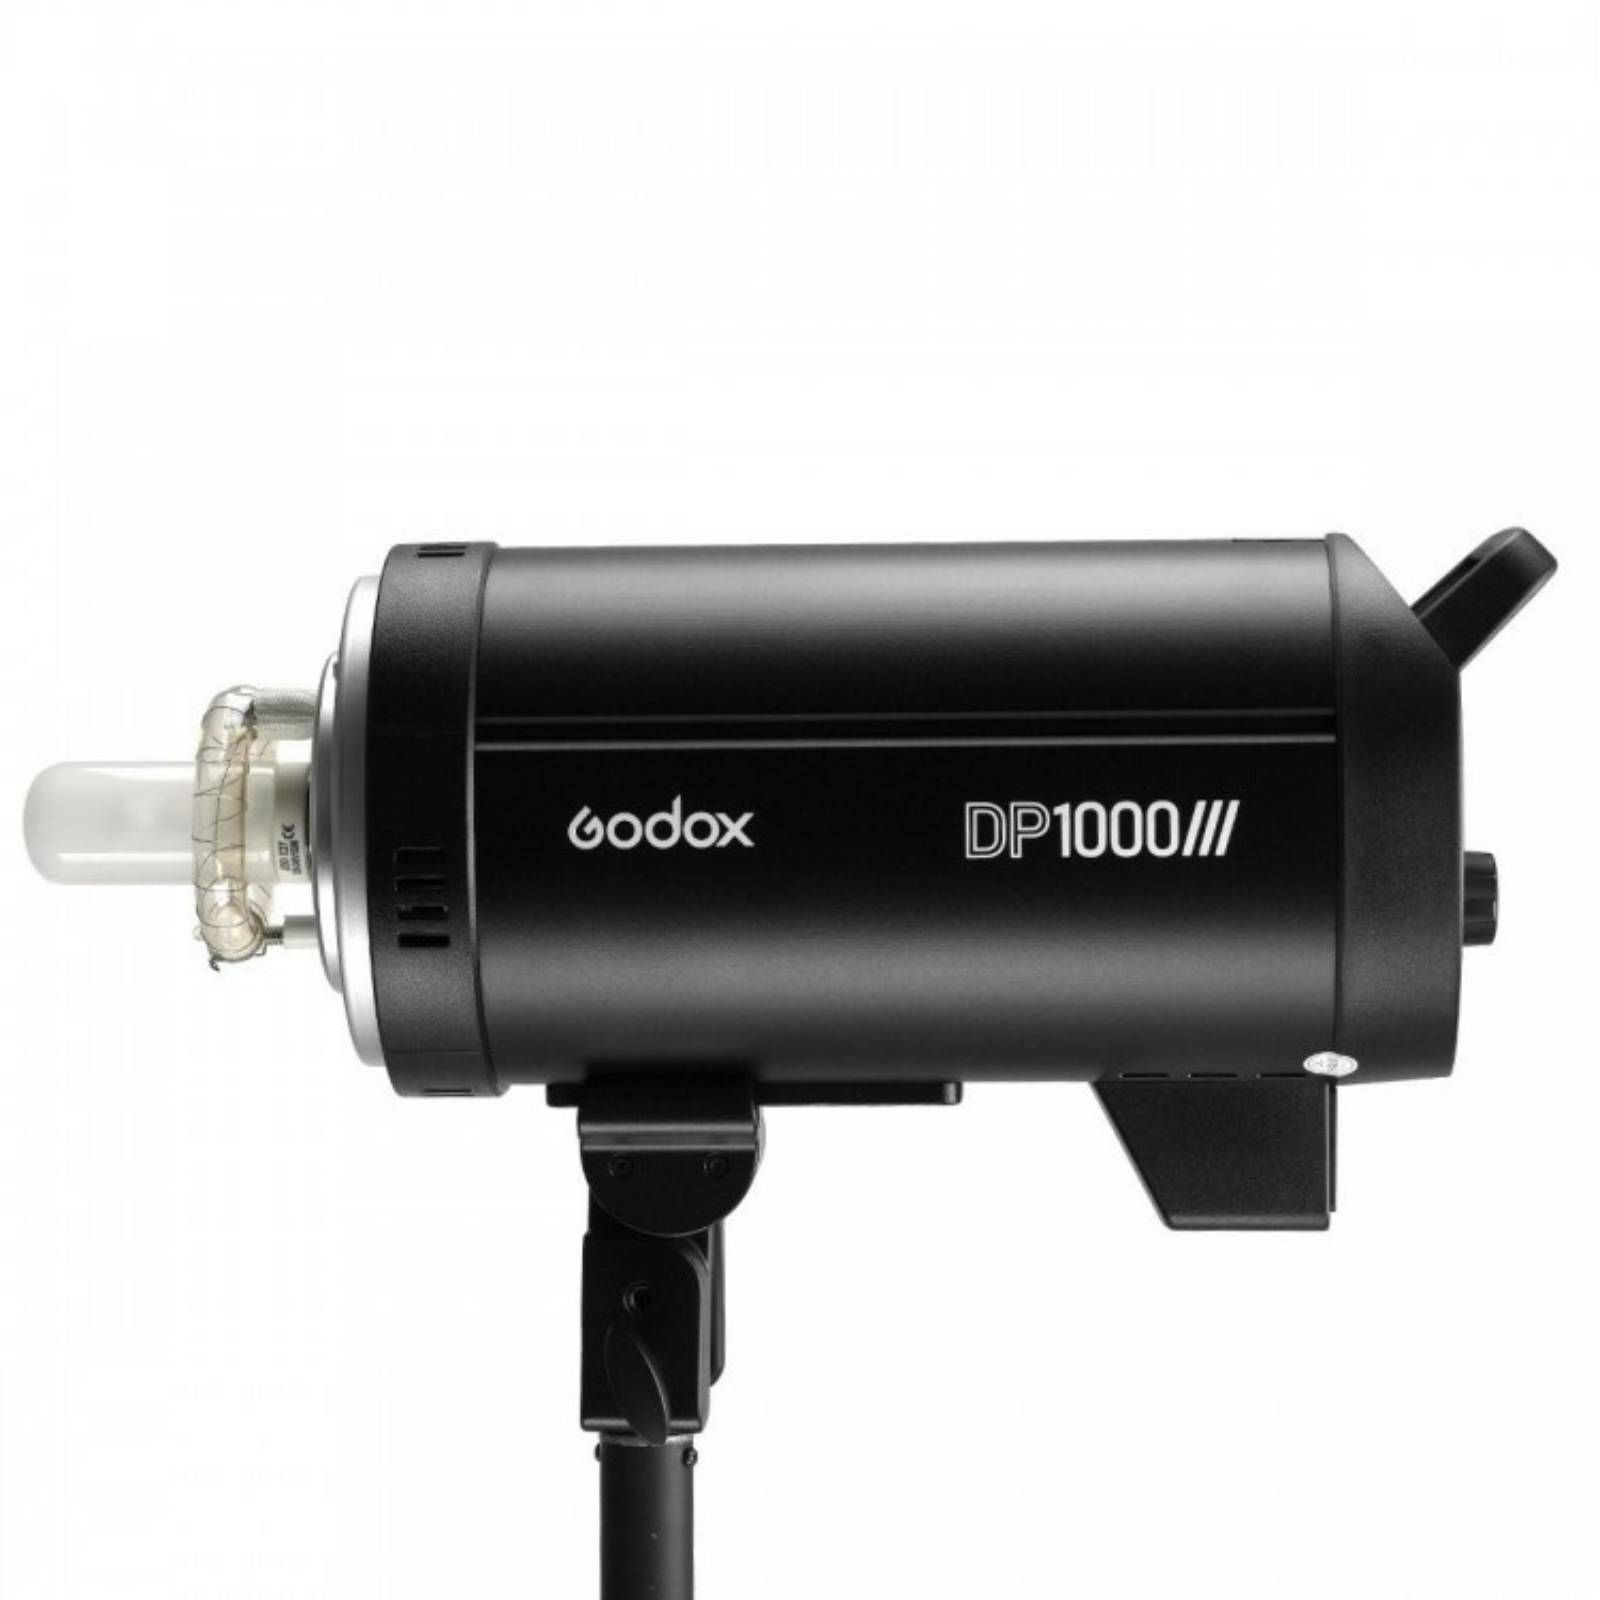 Godox DP1000III Studio Flash studijska bljeskalica DP1000 III